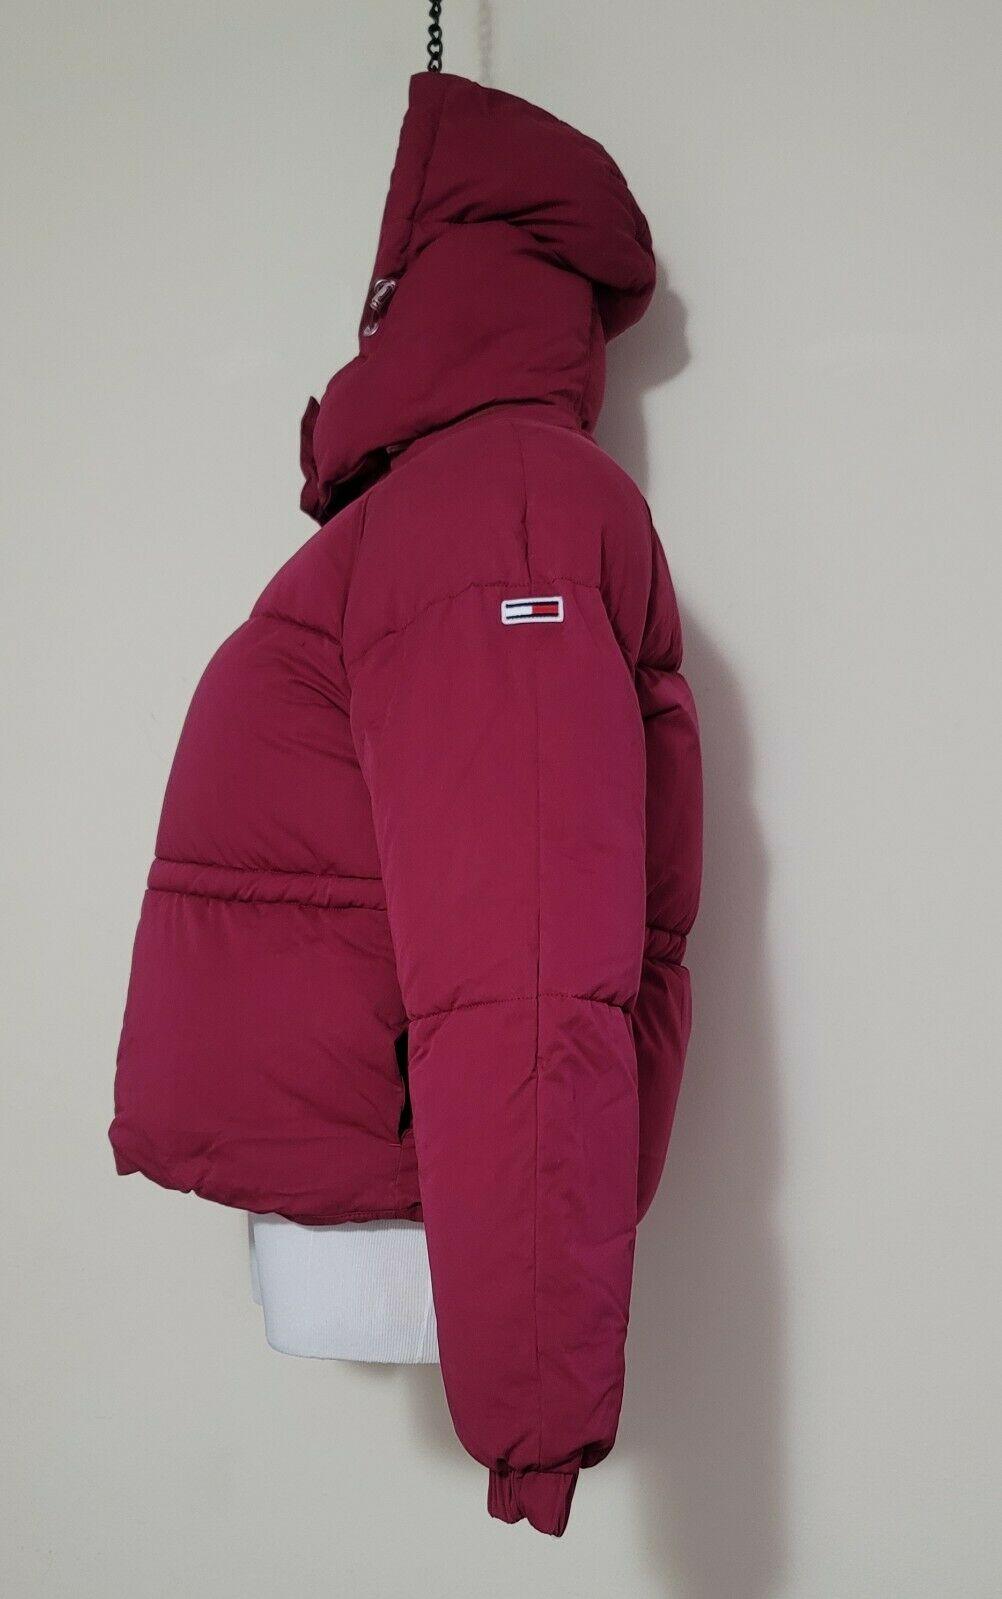 Tommy Hilfiger Women’s Puffer Coat Jacket Oversized Winter Jacket Size S - SVNYFancy